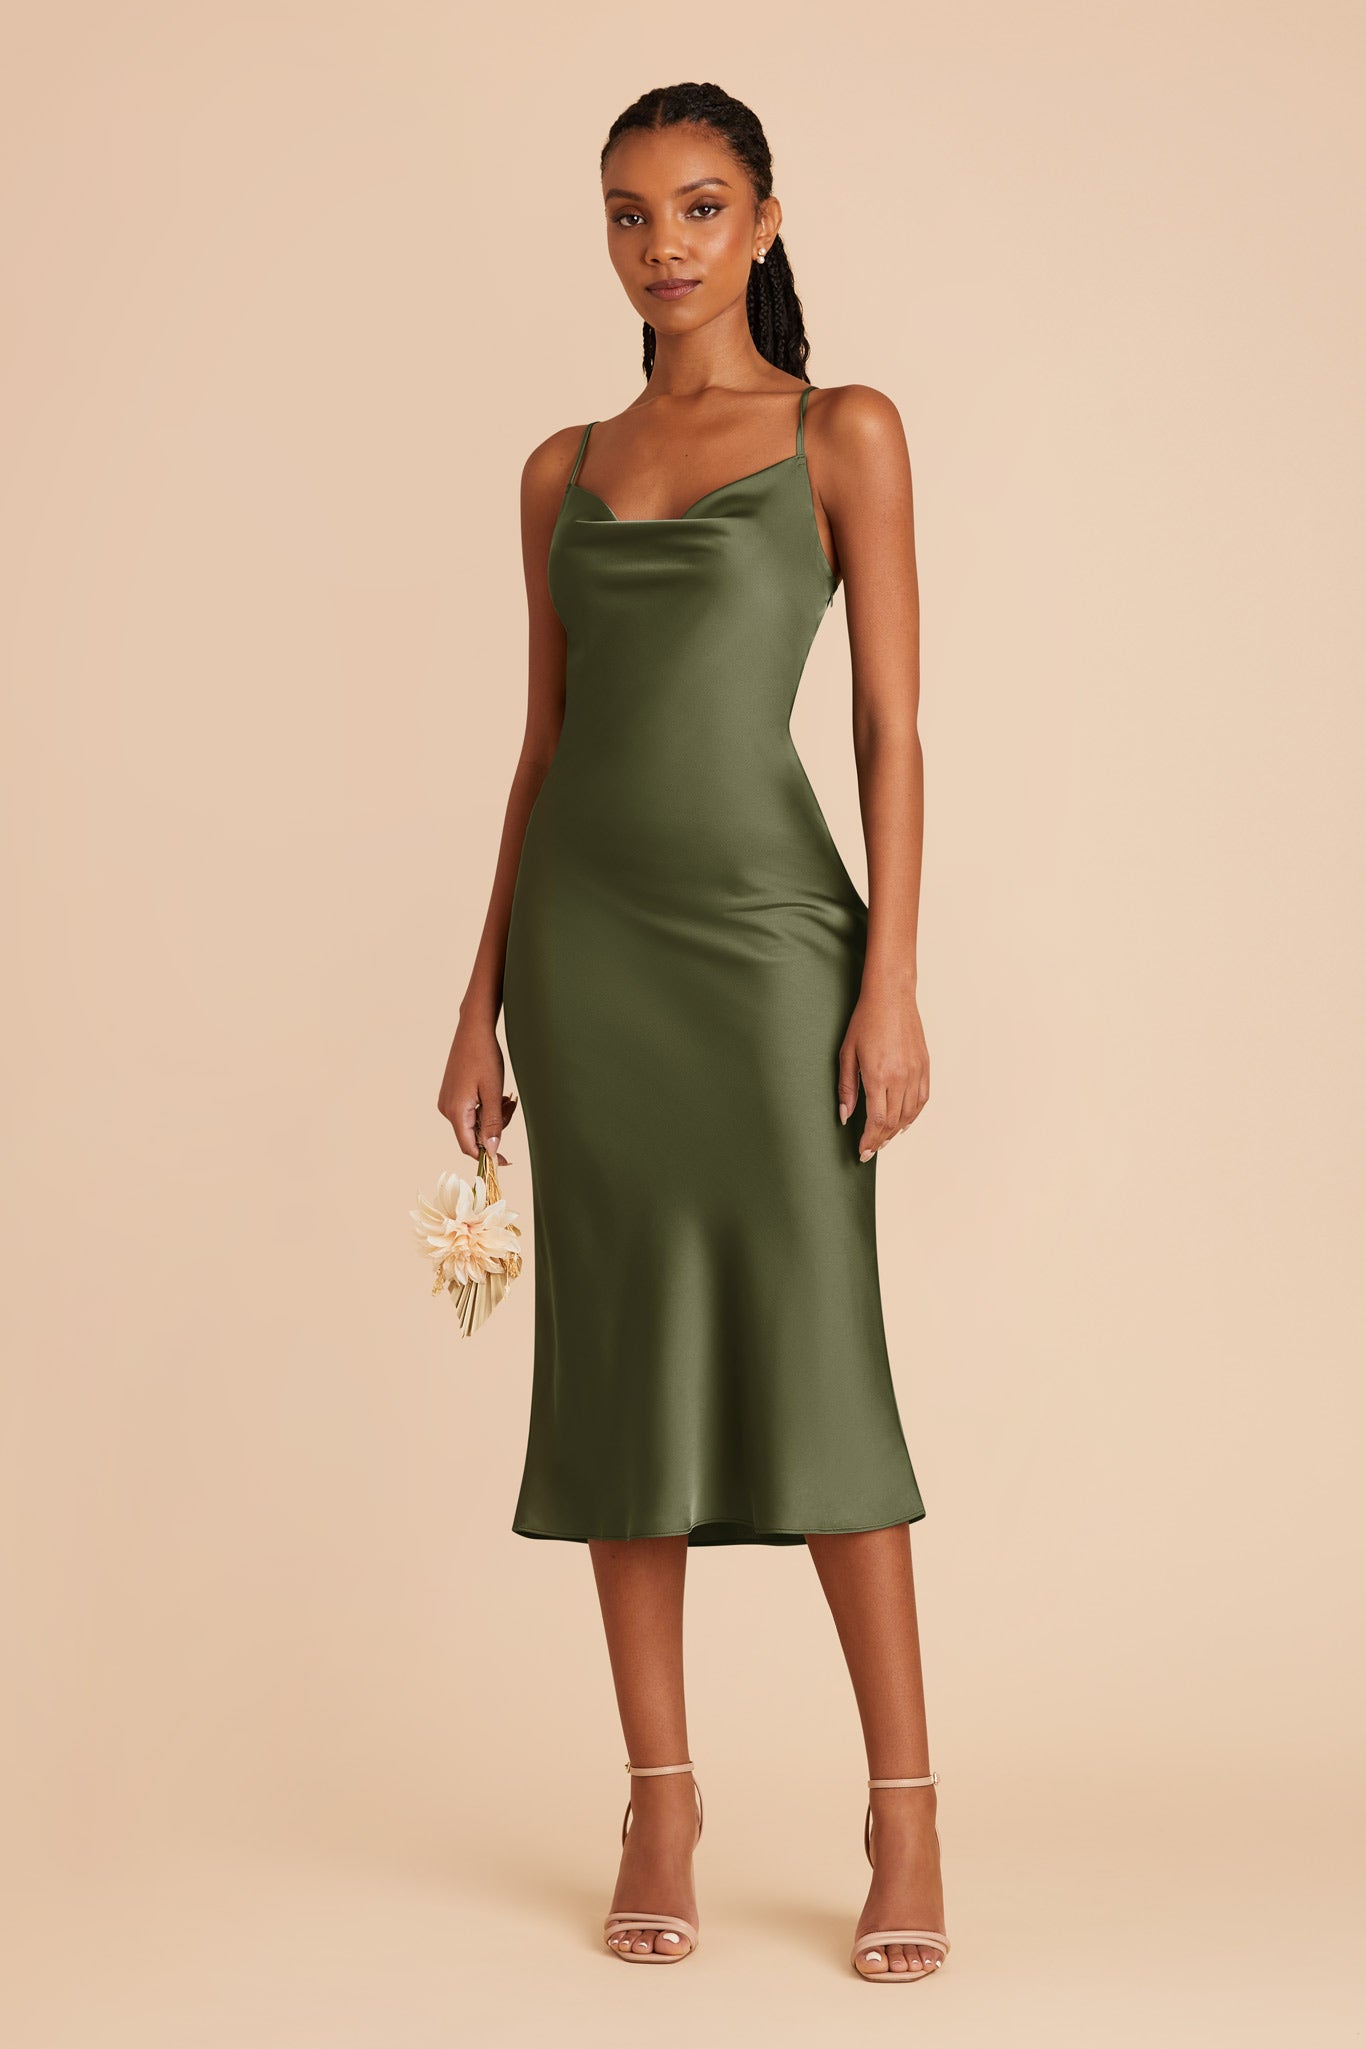 Olive Lisa Matte Satin Midi Dress by Birdy Grey